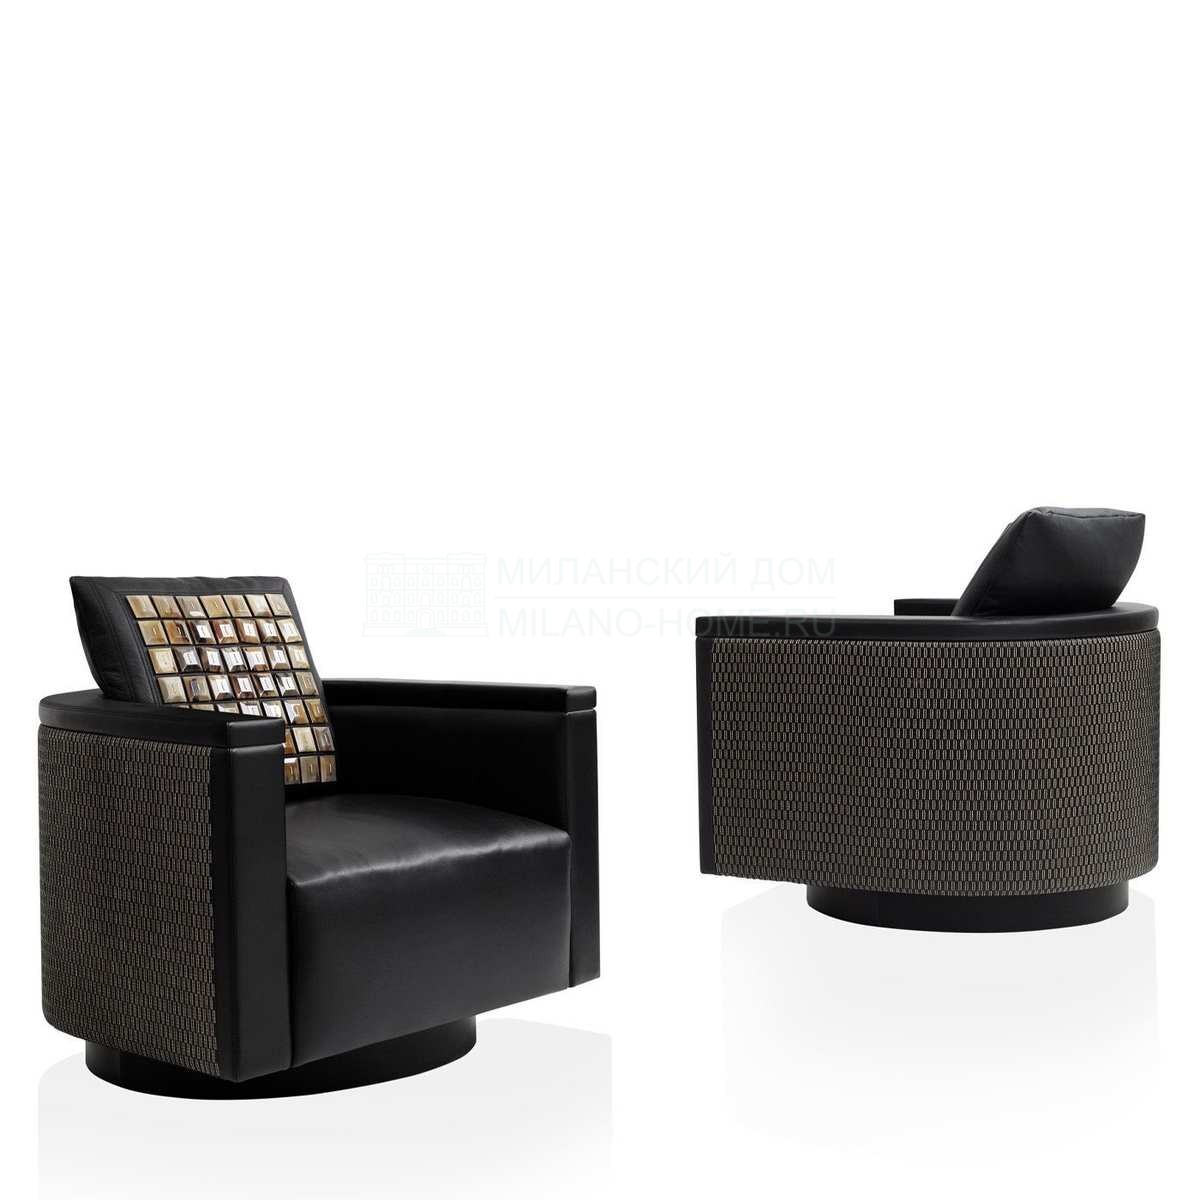 Кожаное кресло Leonia / art. 4409S из Италии фабрики ARCAHORN